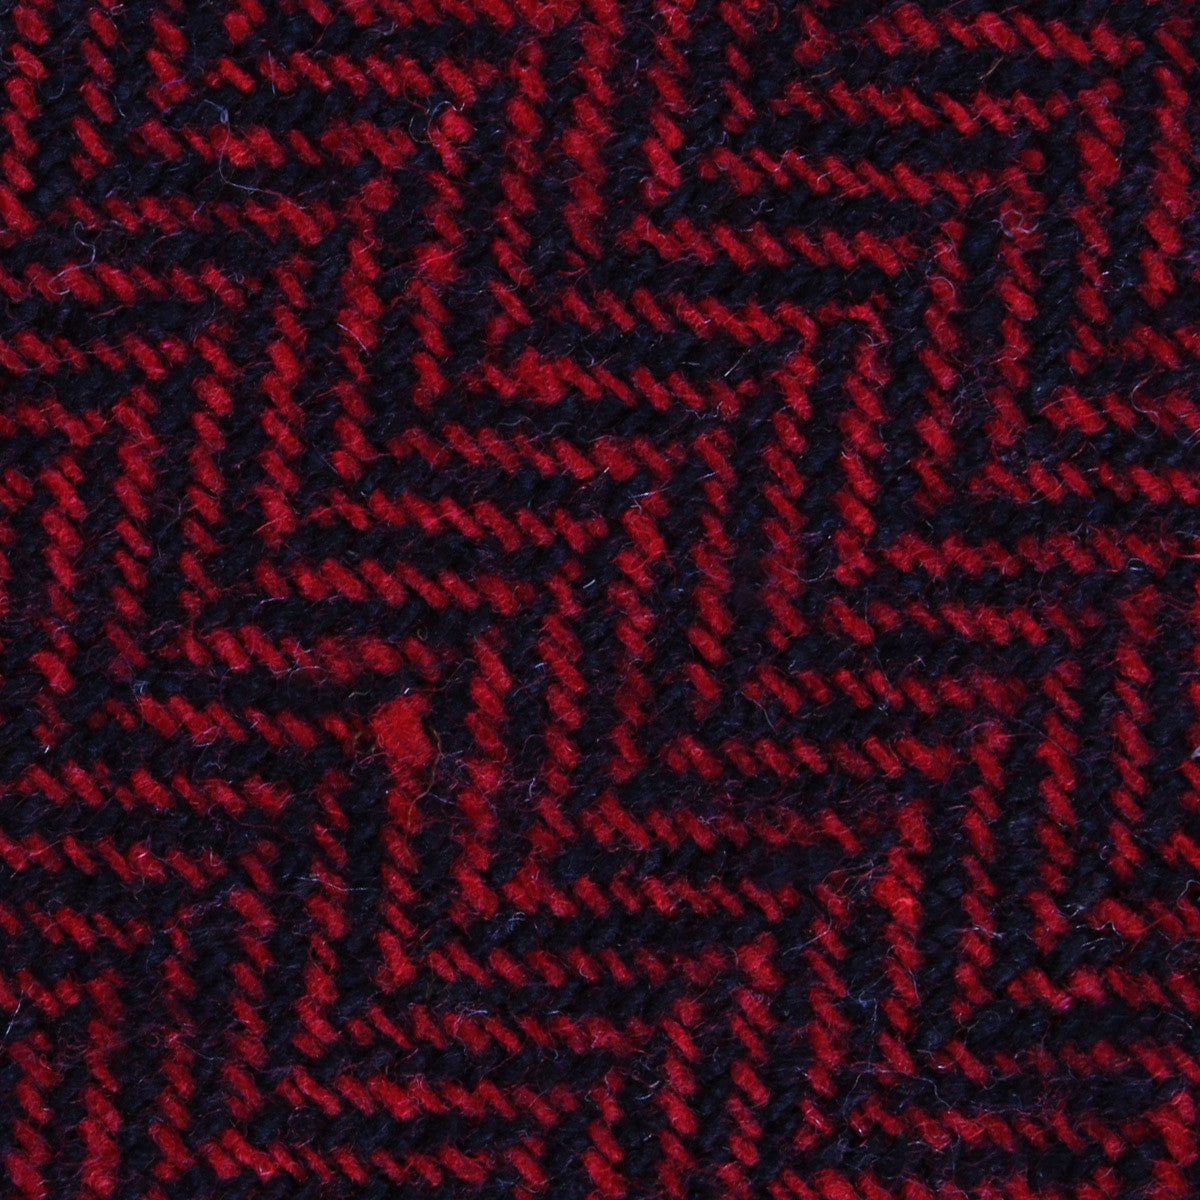 Black & Red Herringbone Wool Fabric Self Diamond Bowtie